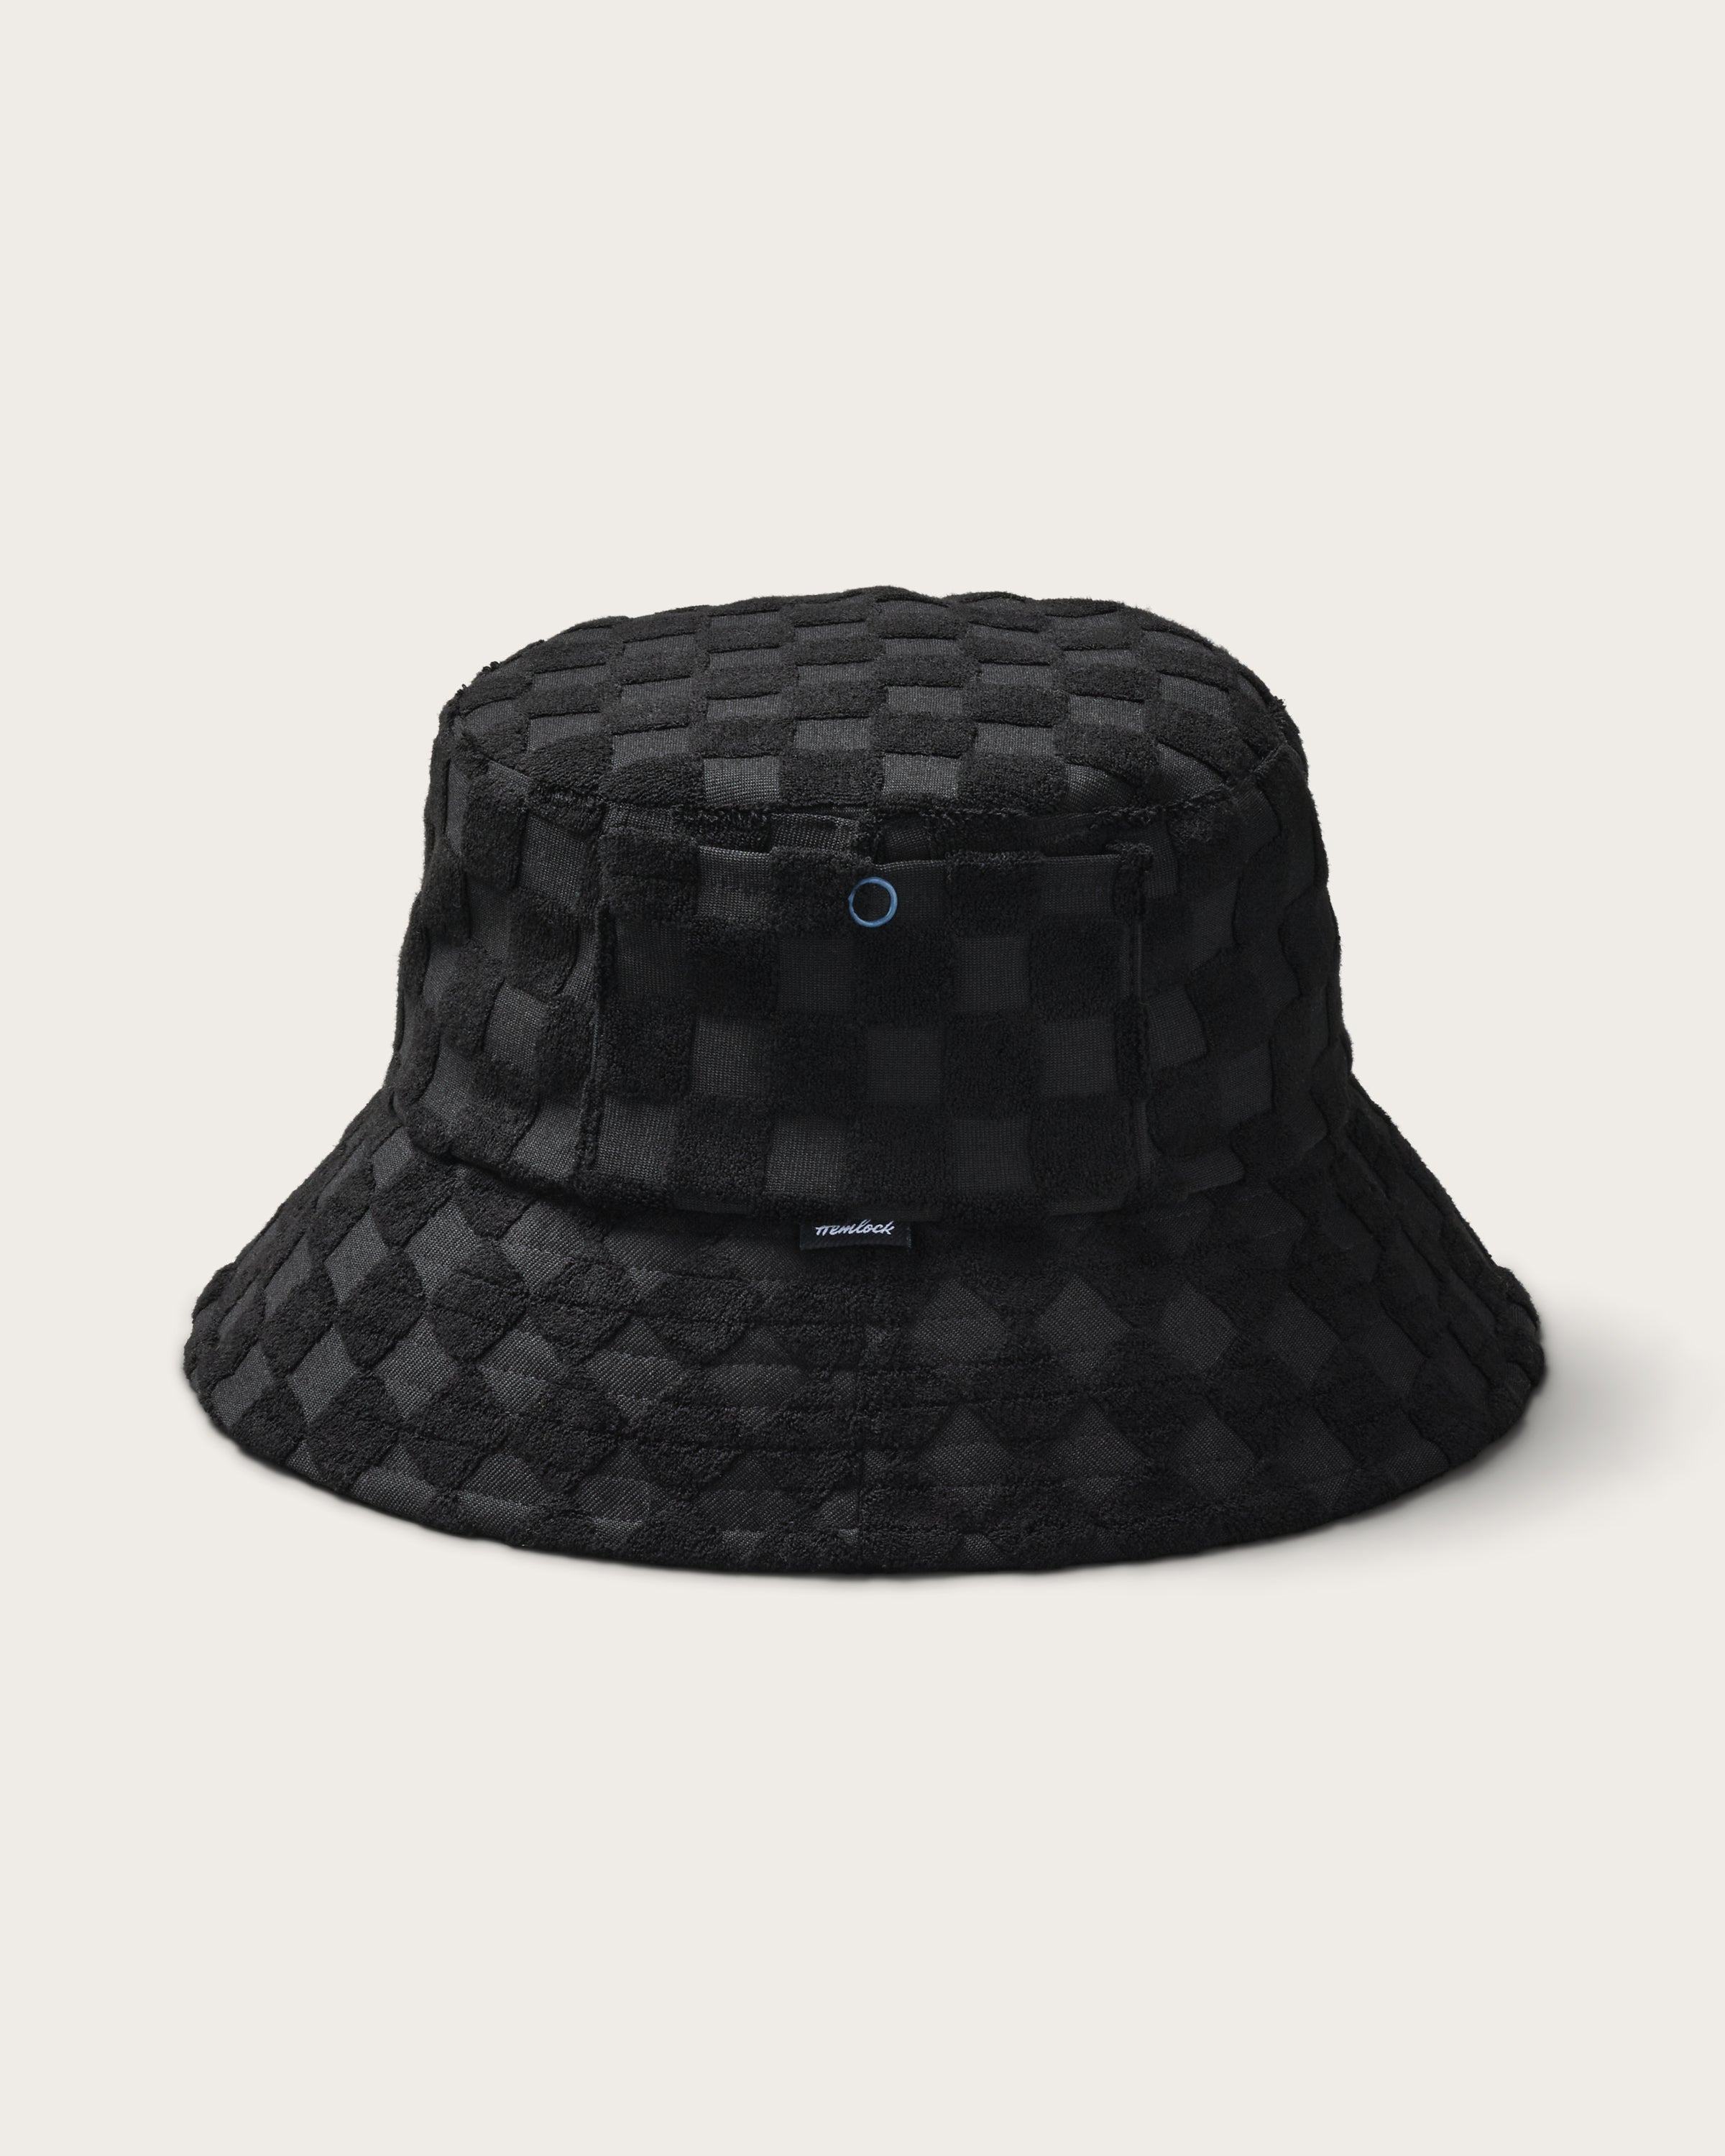 Hemlock Marina Terry Bucket Hat in Black Check side profile